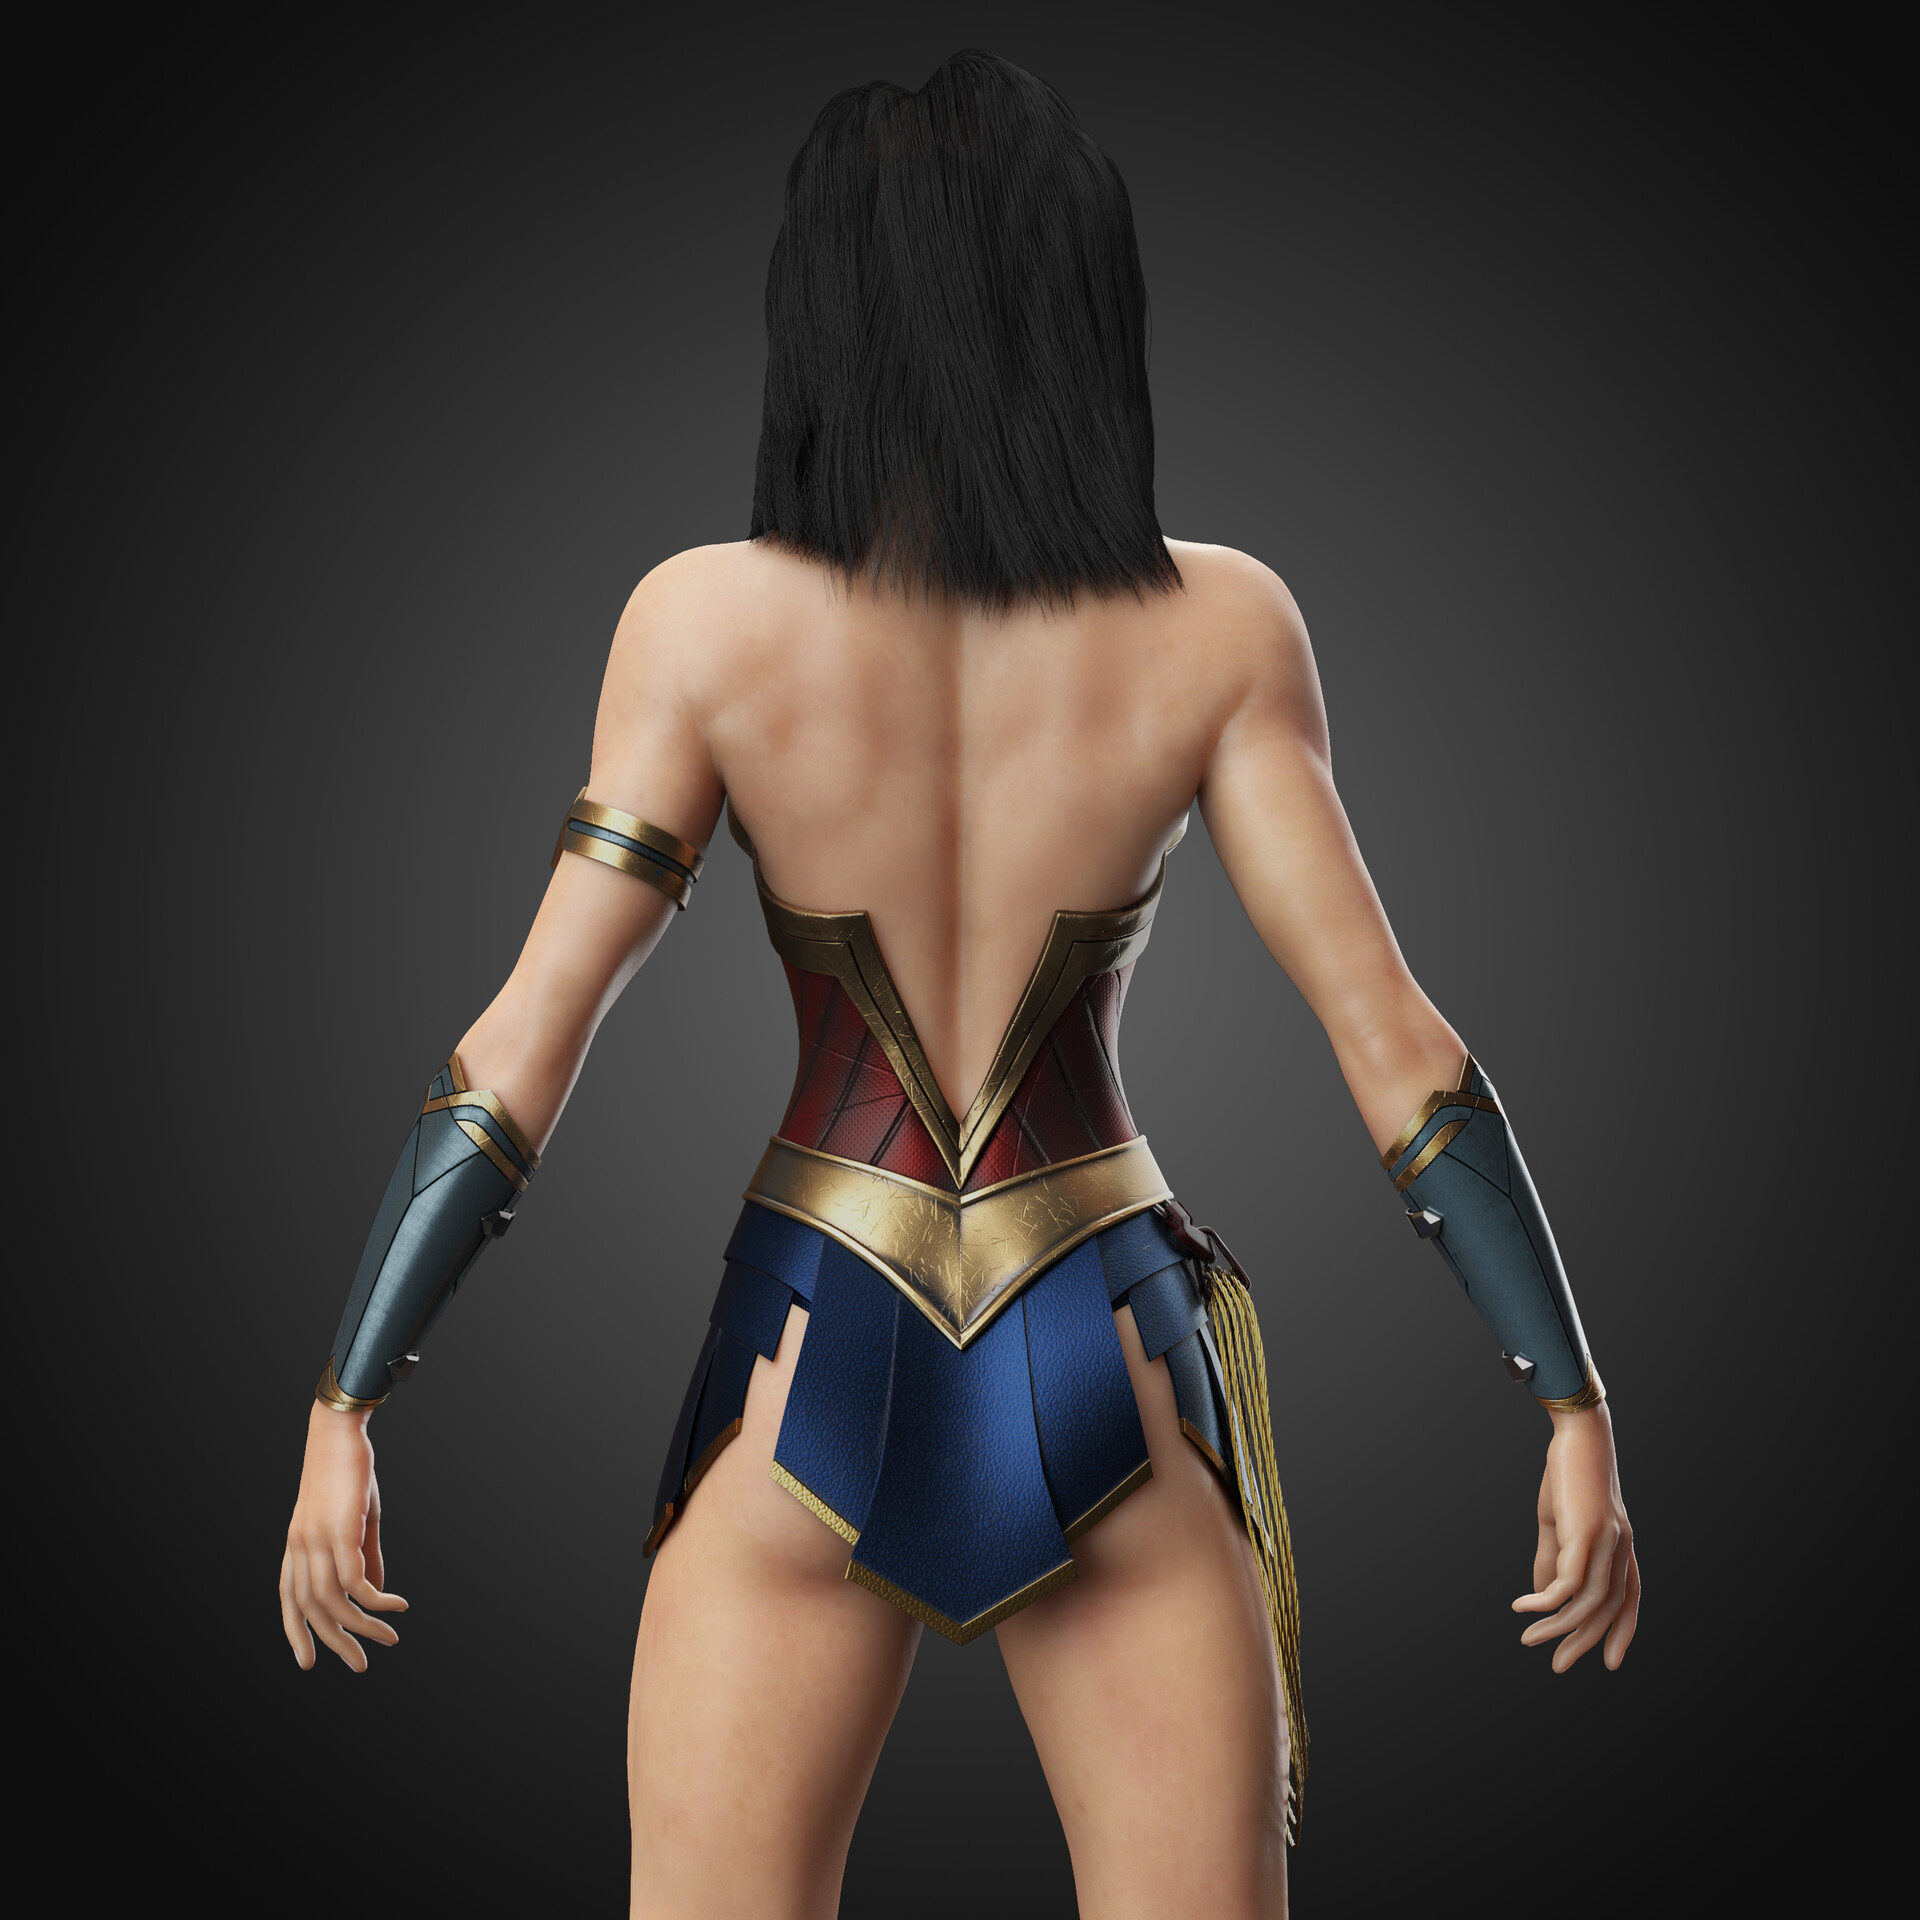 ArtStation - Wonder Woman: Bloodlines